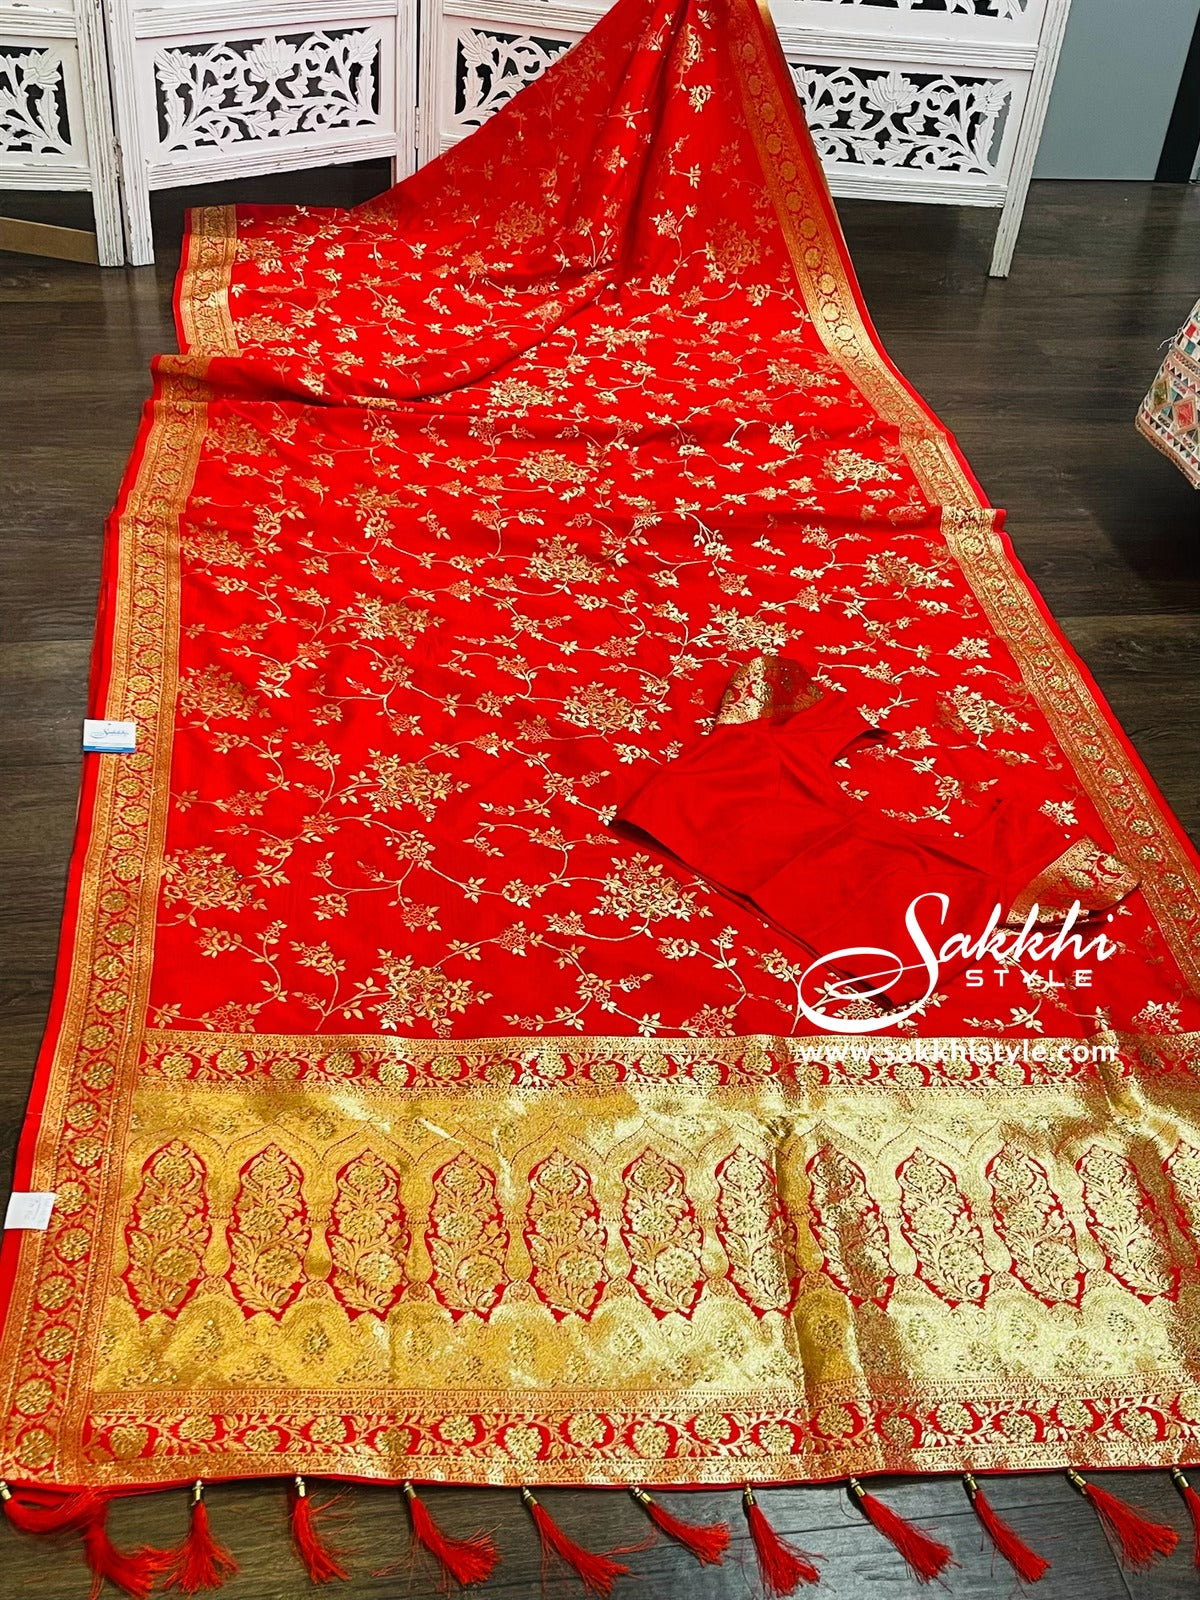 Red and Gold Embroidered Banaras Saree - Sakkhi Style